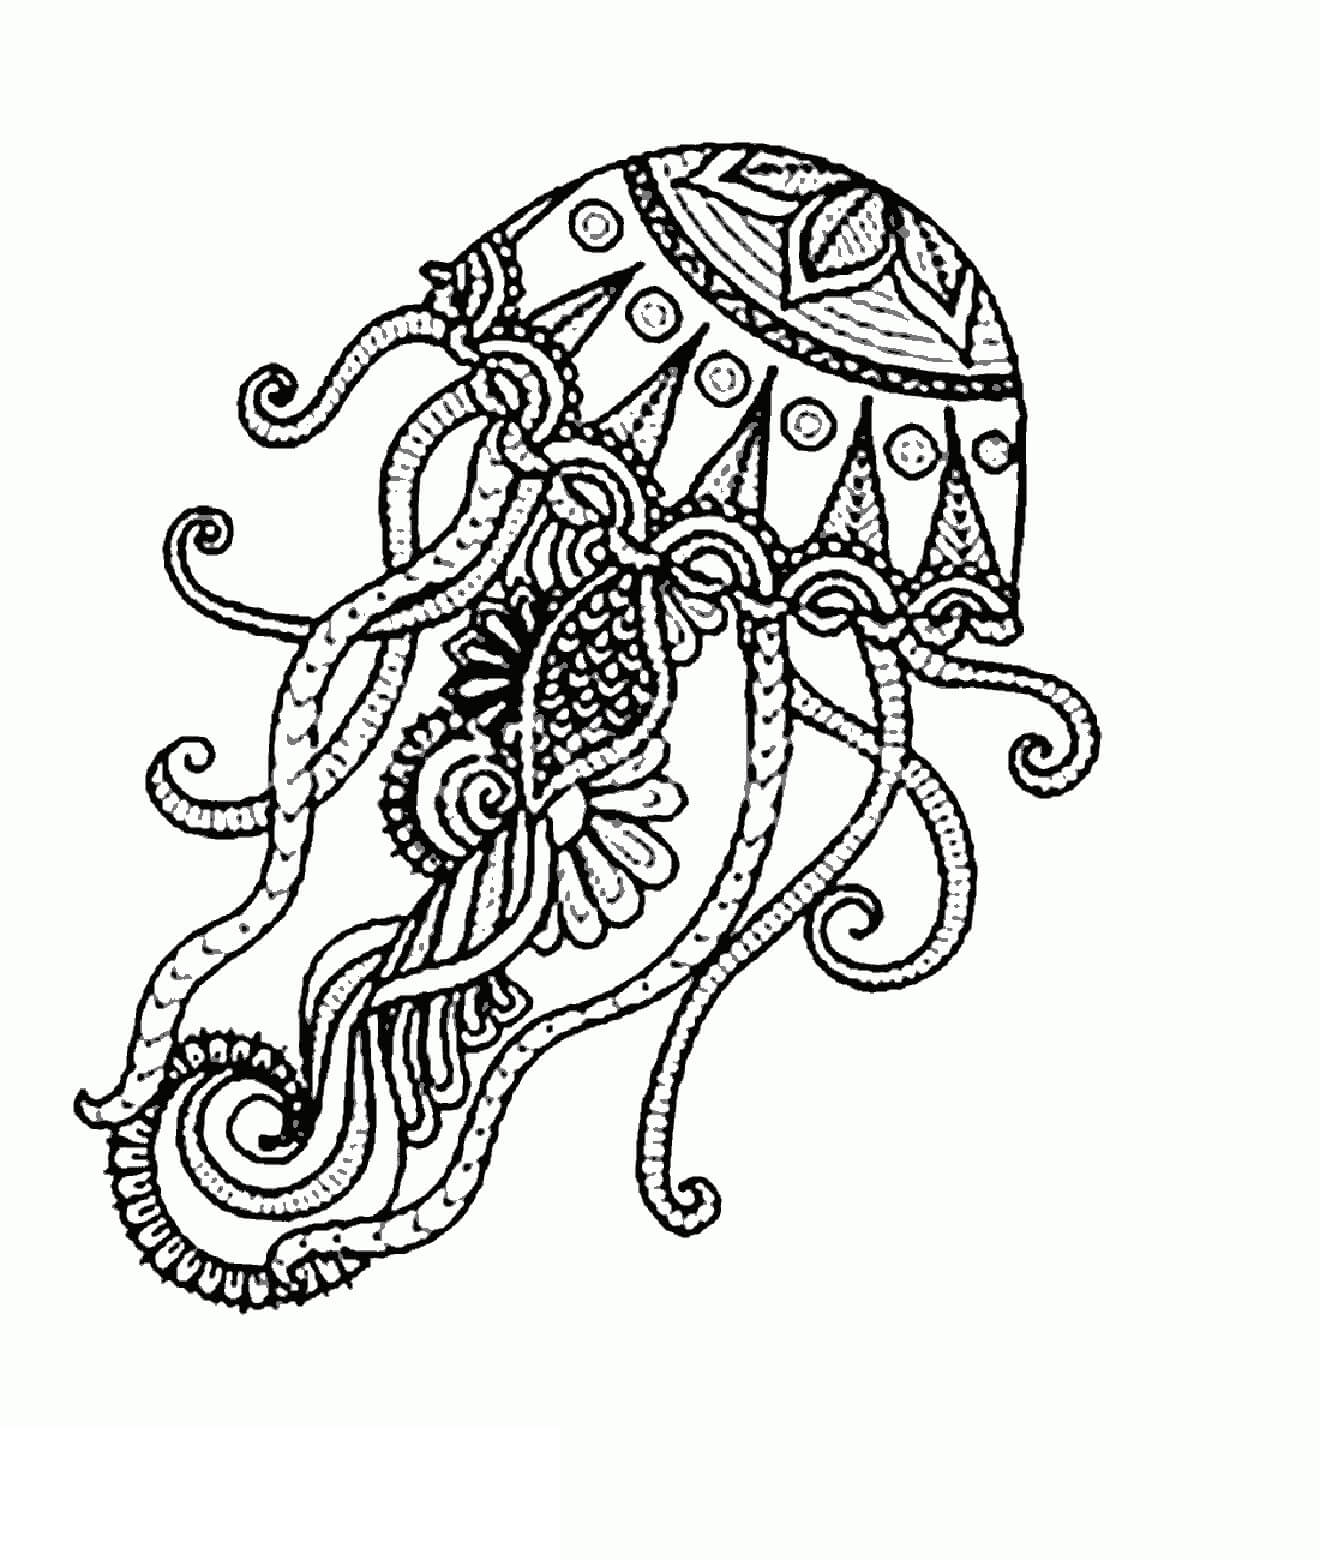 Mandala Jellyfish Coloring Page - Sheet 6 Mandalas